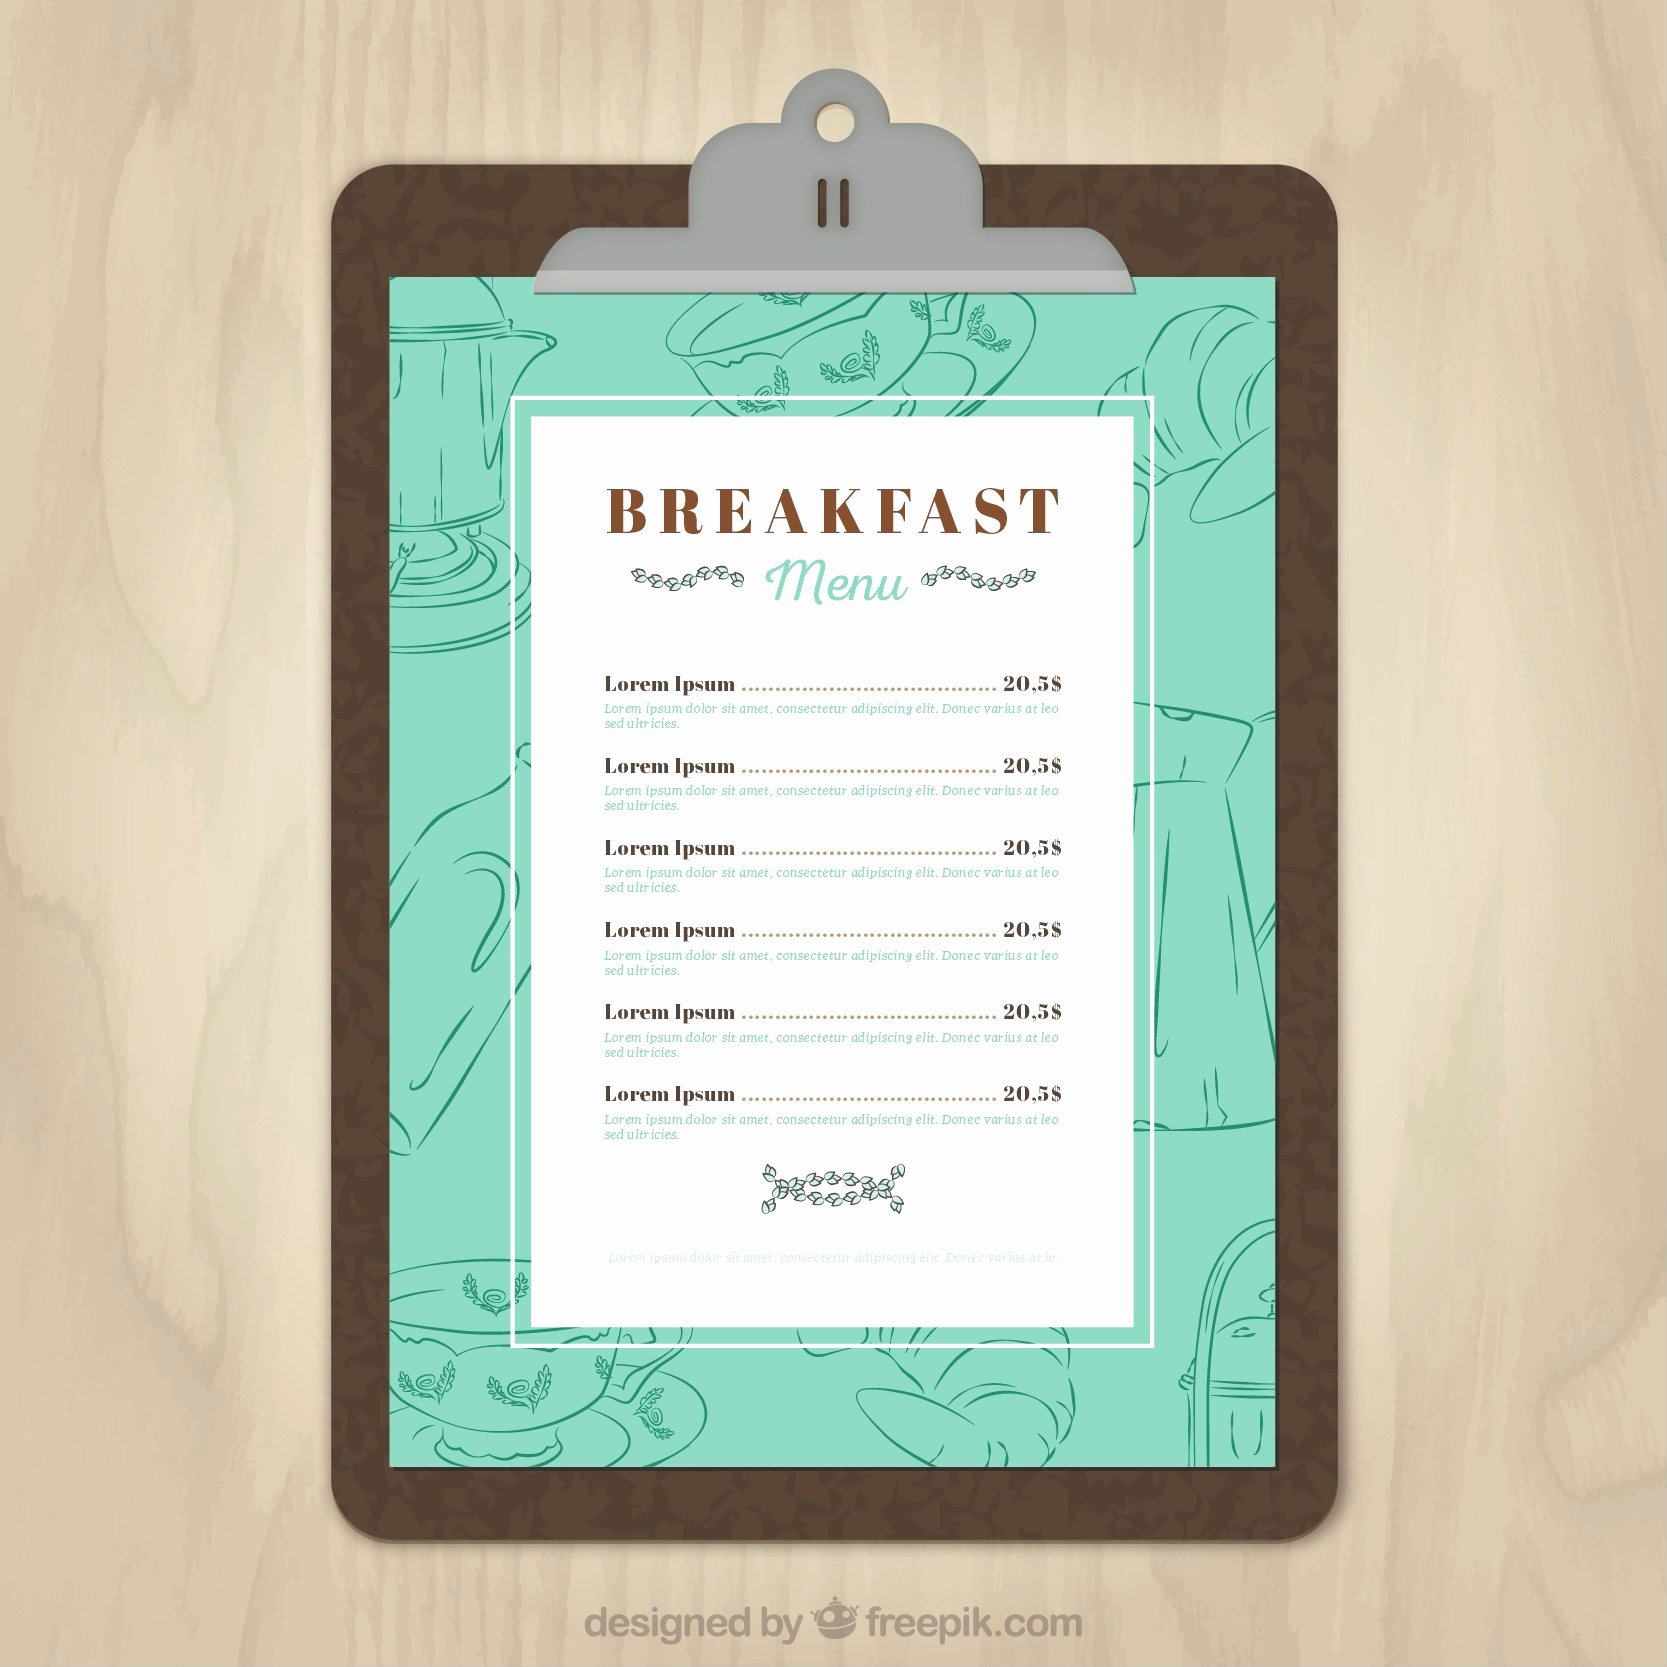 Brunch Menu Templates Awesome 11 Free Sample Breakfast Menu Templates Printable Samples